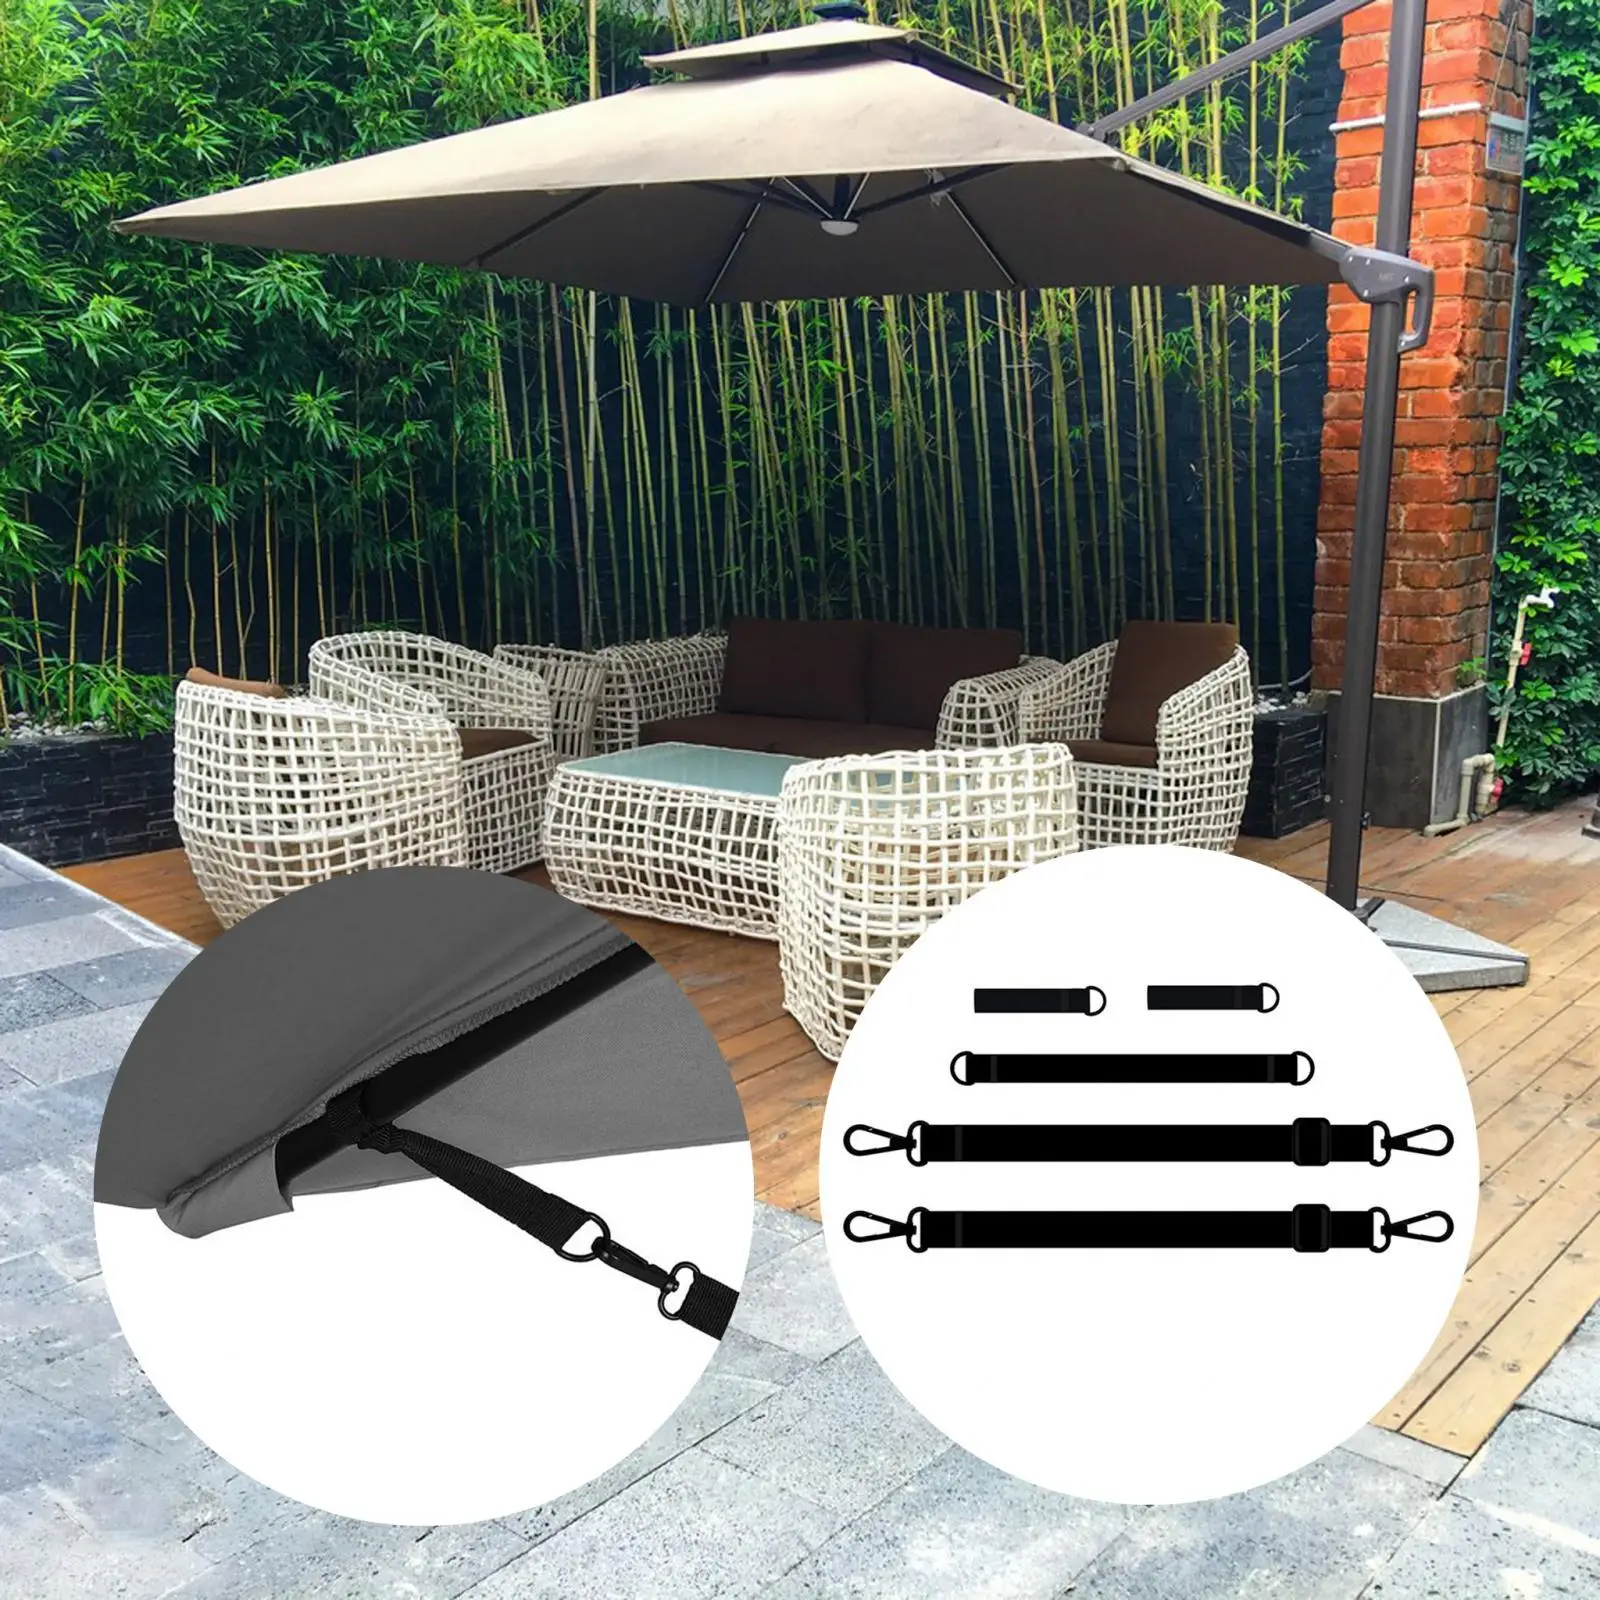 5Pcs Outdoor Umbrella Strap Adjustable Tie Strap Weatherproof Wind Protection for Parasol for Shading Outdoor Garden Patio Beach